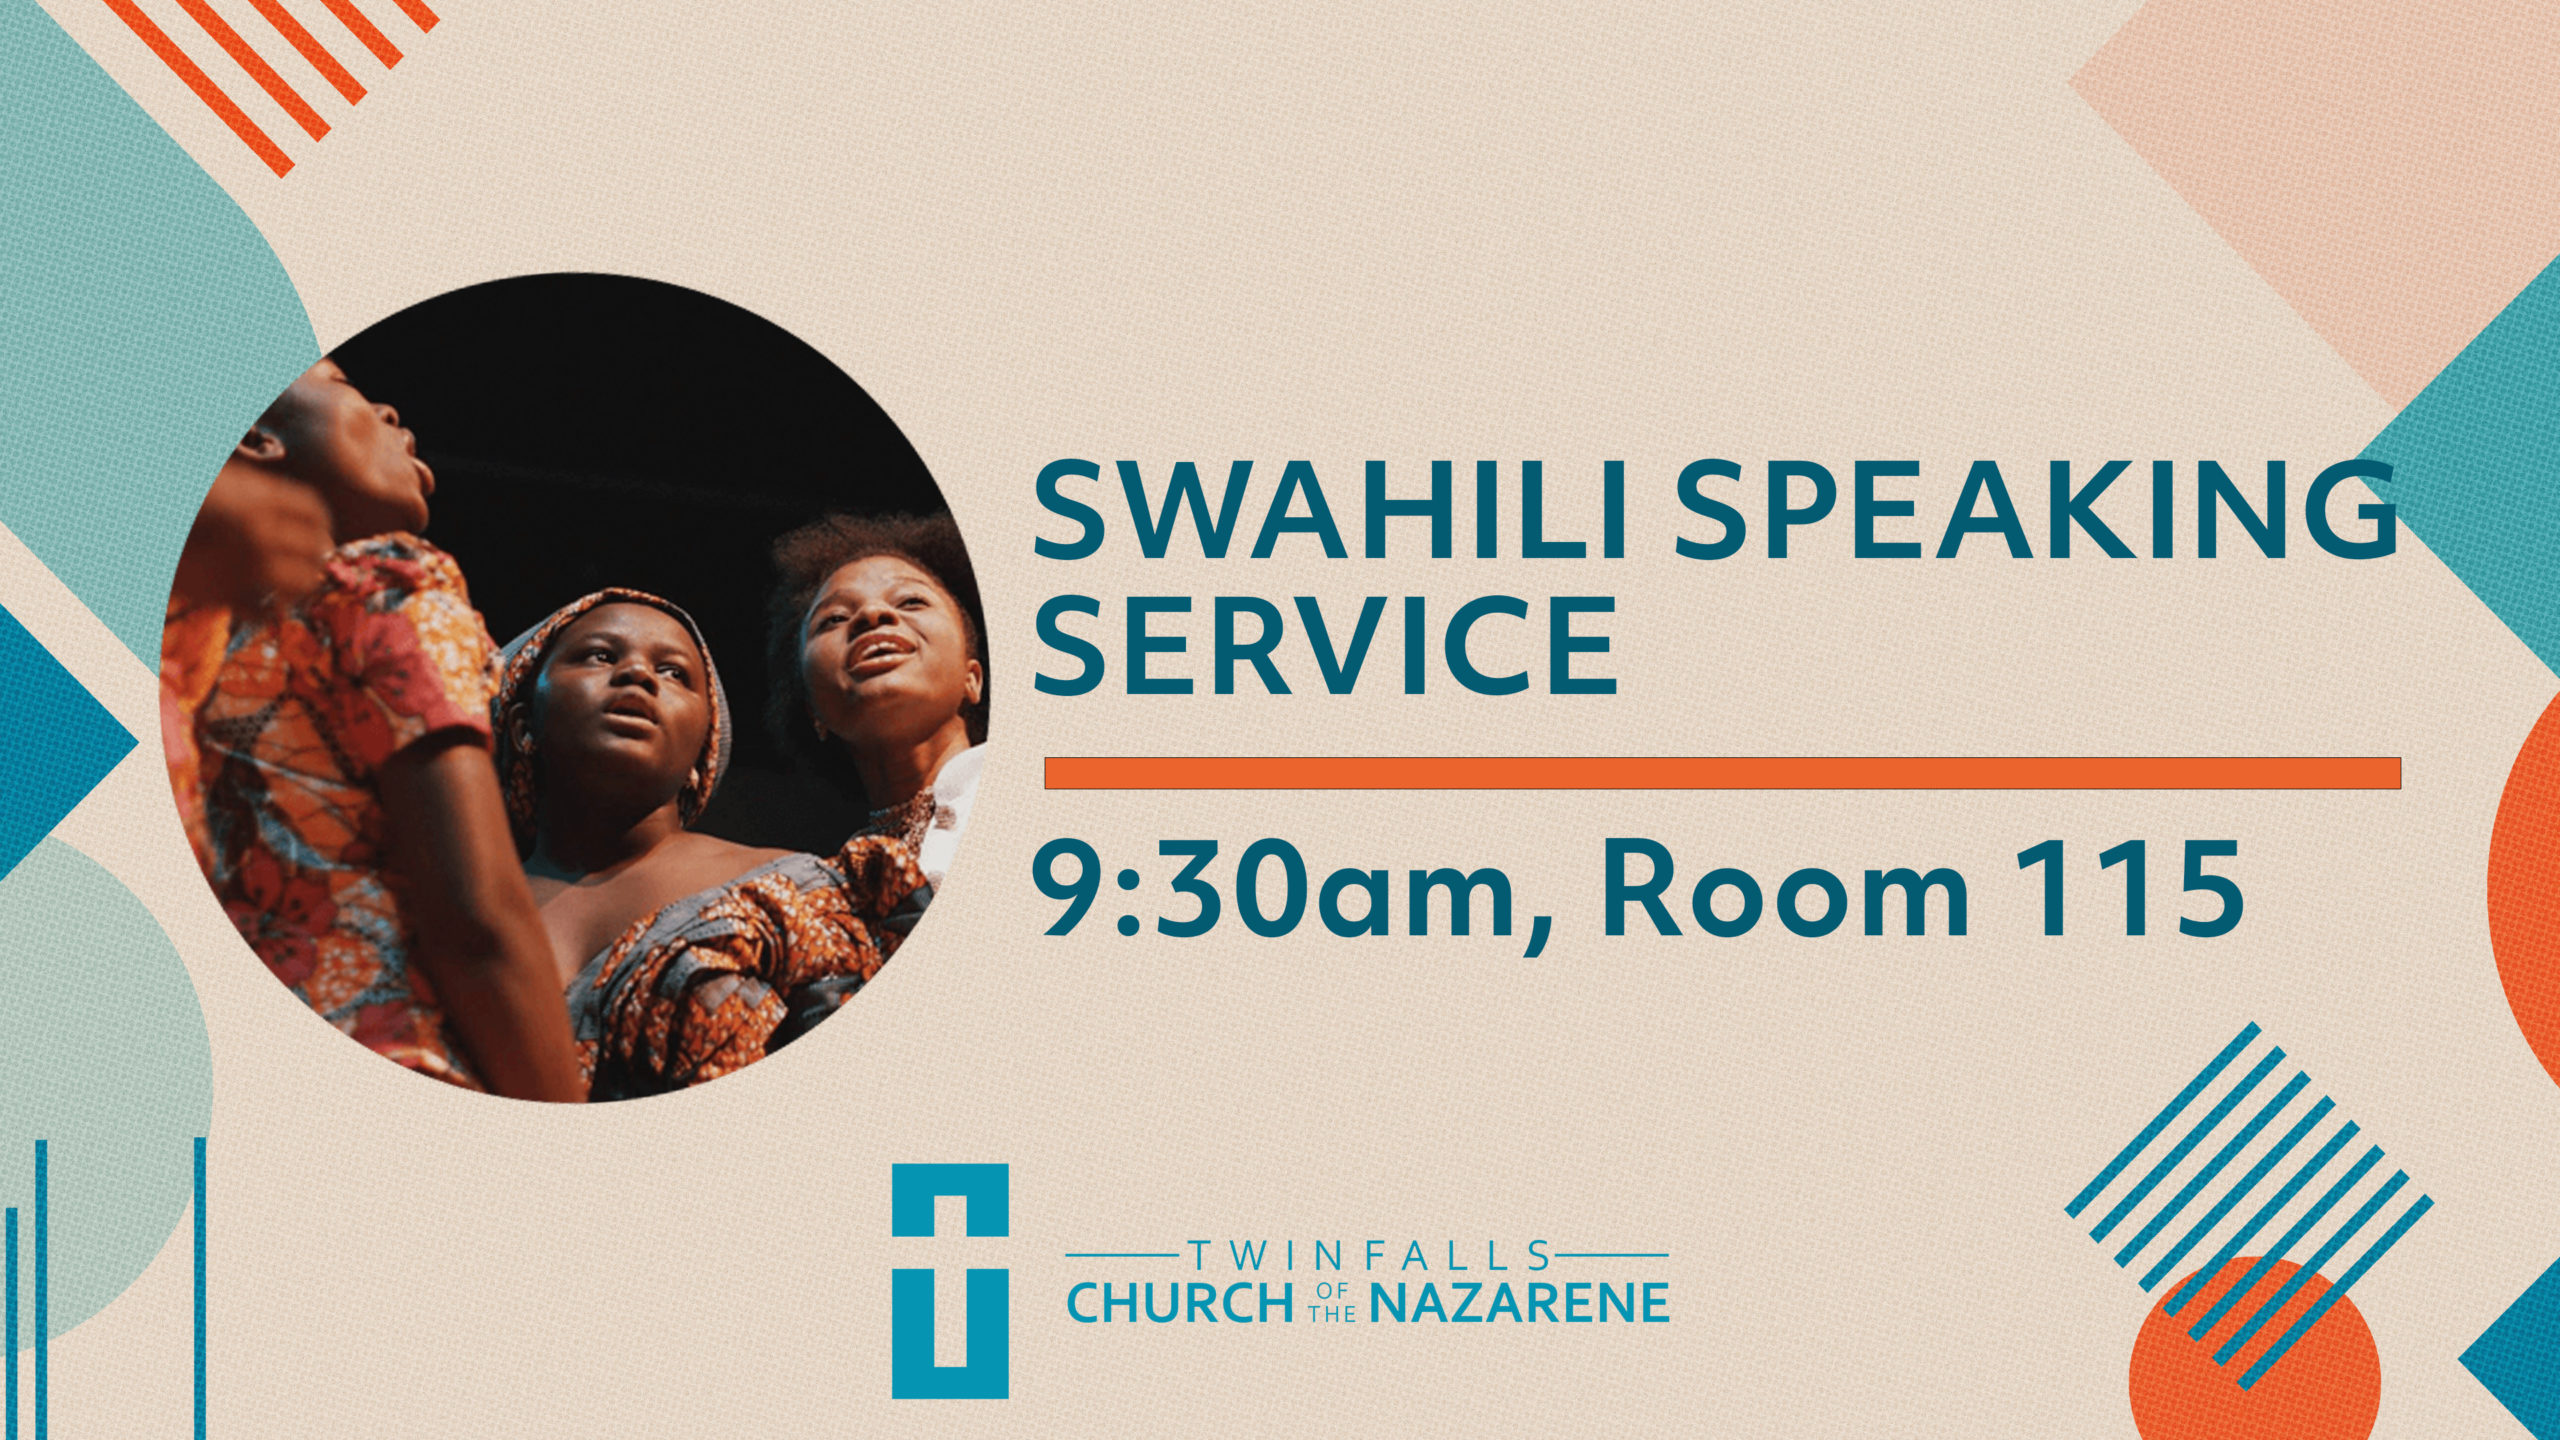 Swahili Speaking Service, 9:30am, Room 115